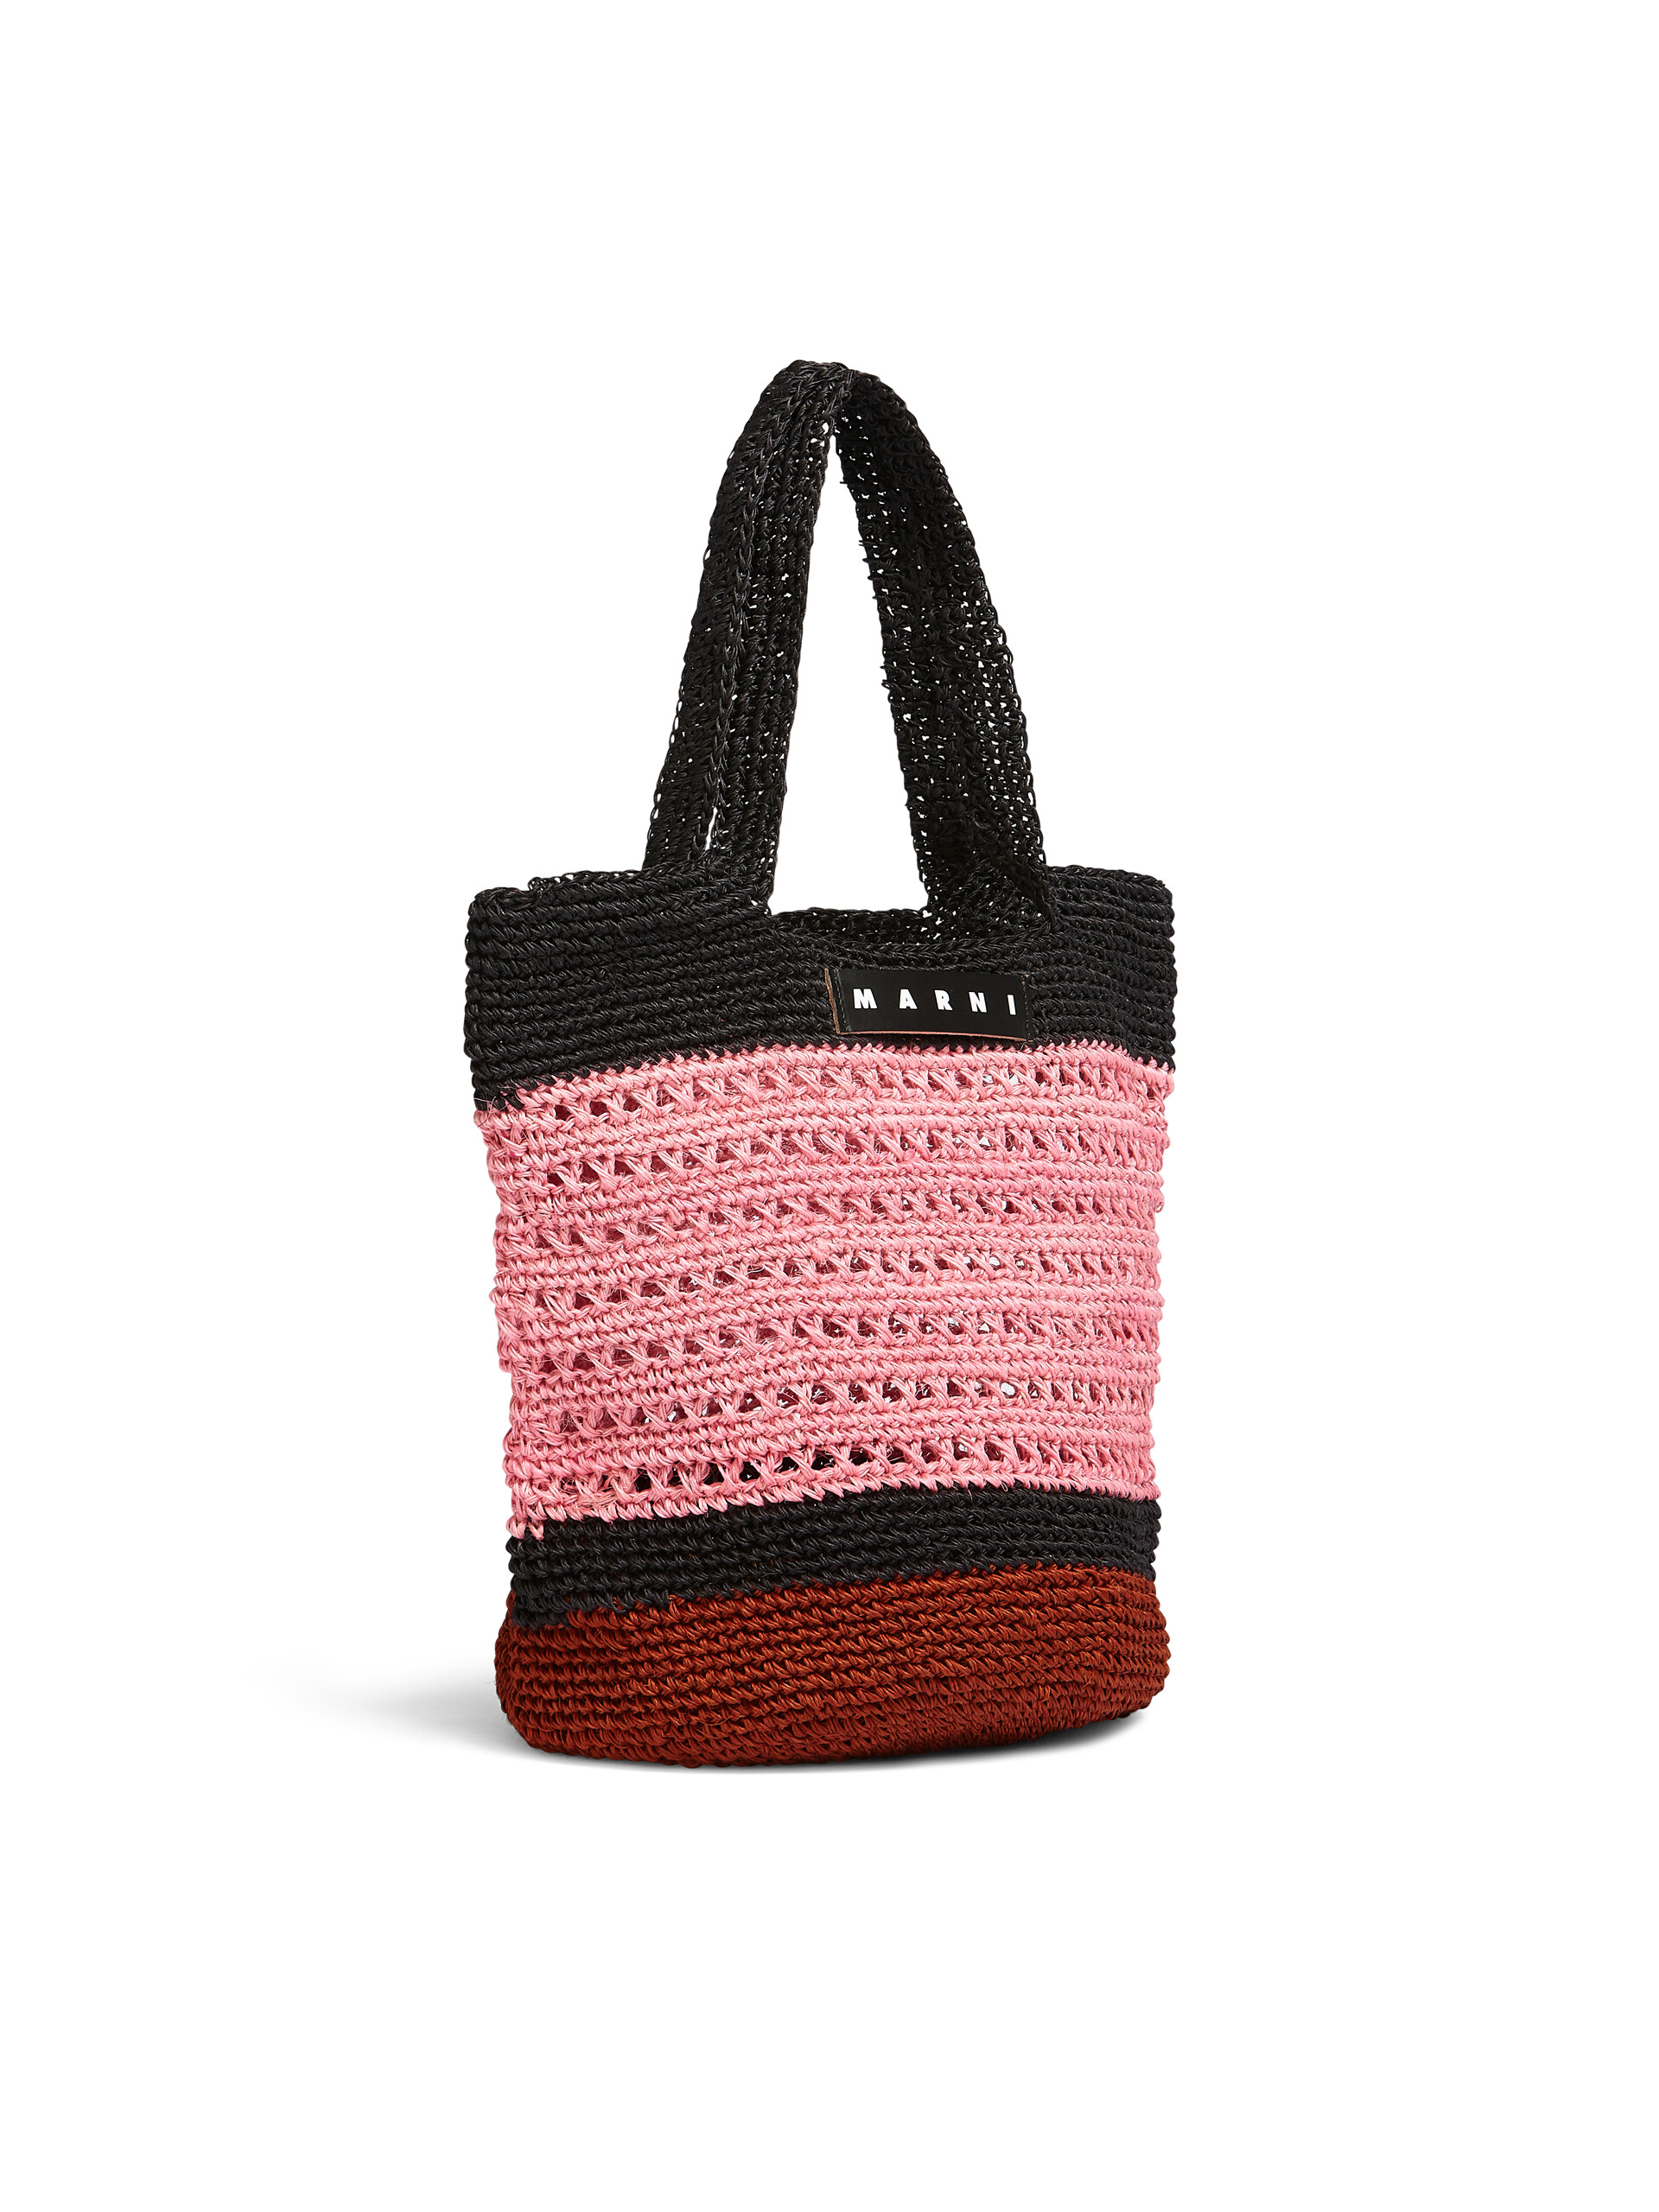 MARNI MARKET bag in pink and black natural fiber - Bags - Image 2